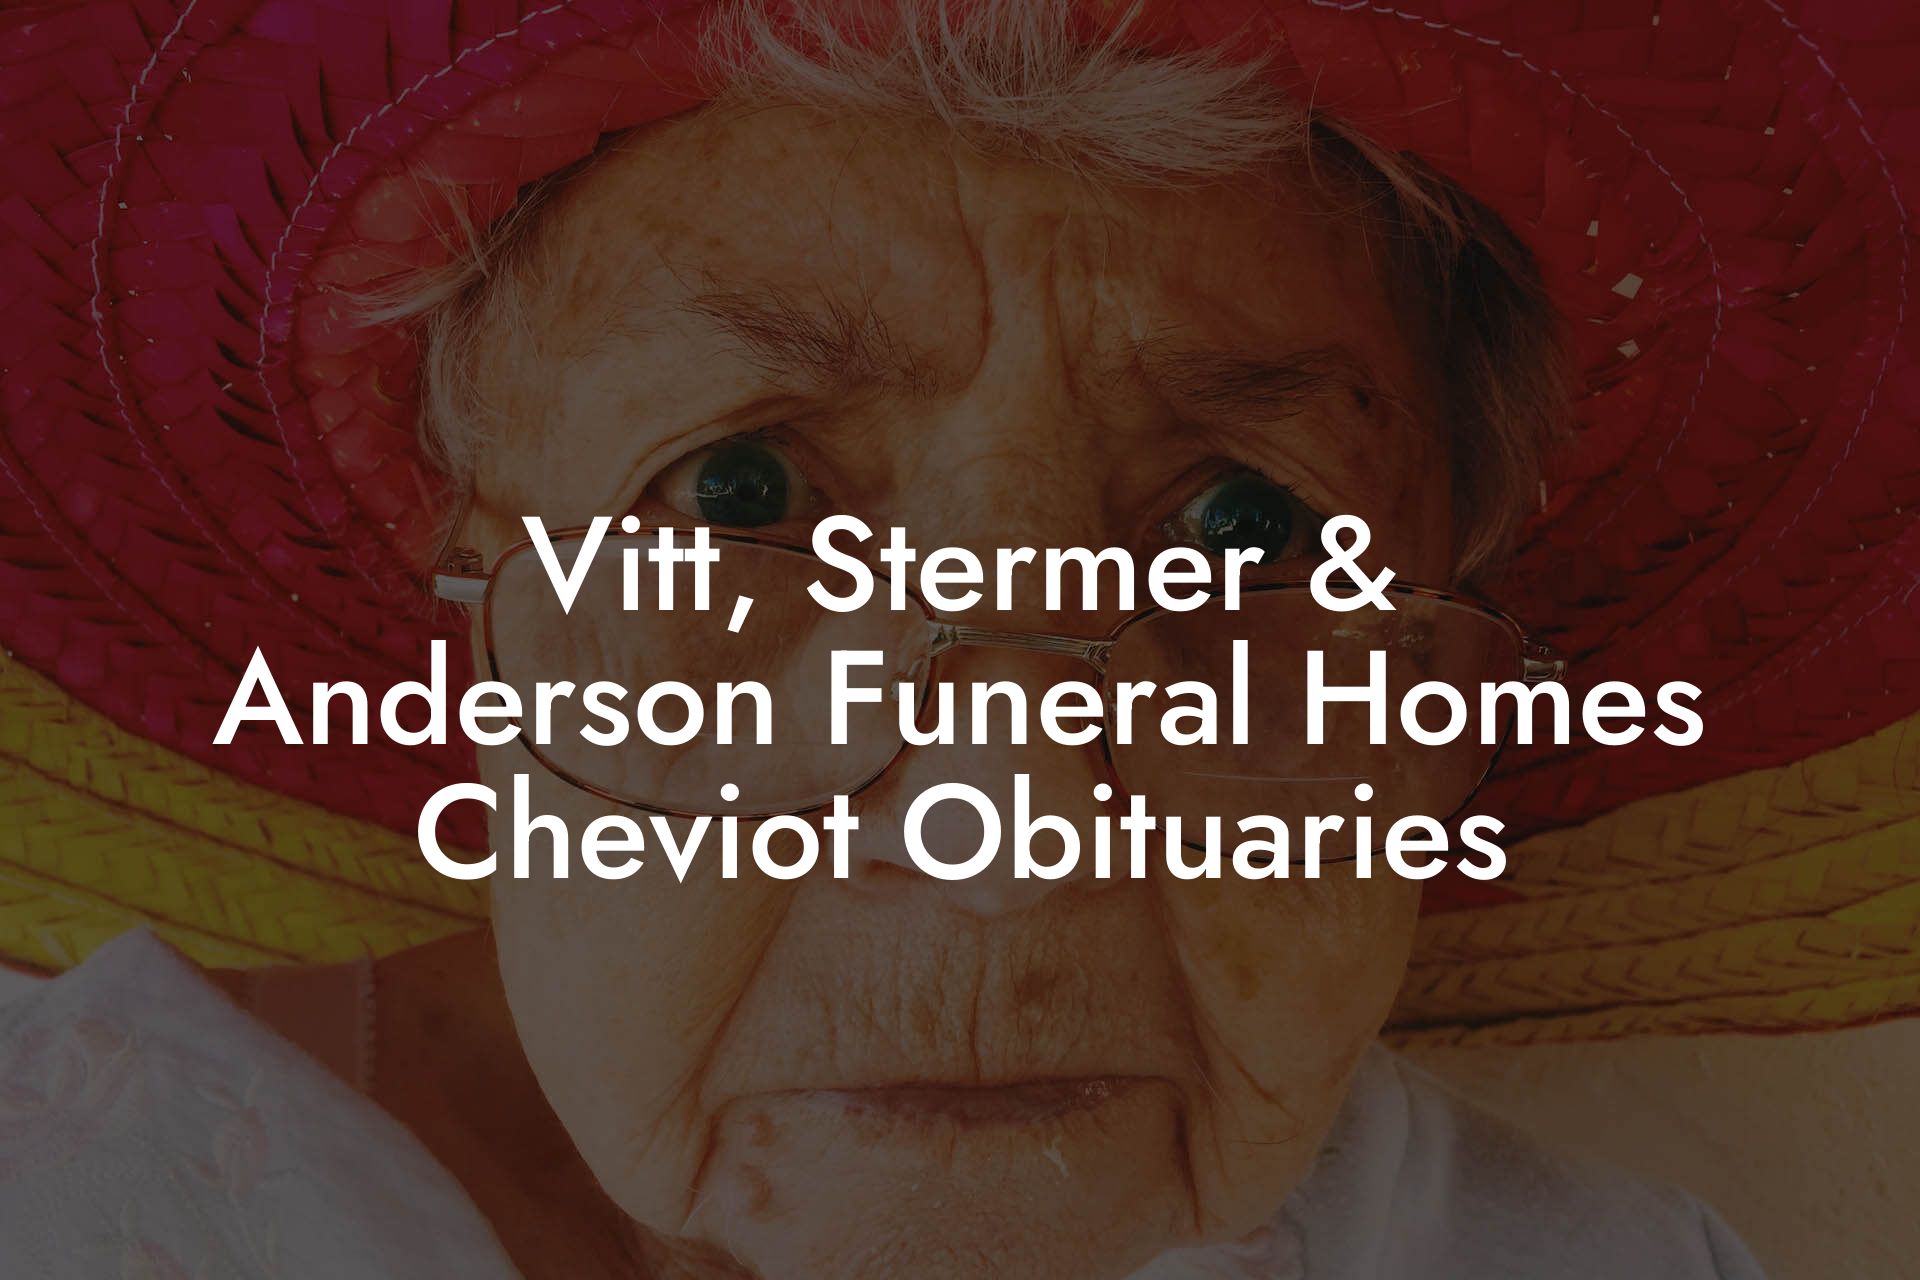 Vitt, Stermer & Anderson Funeral Homes Cheviot Obituaries